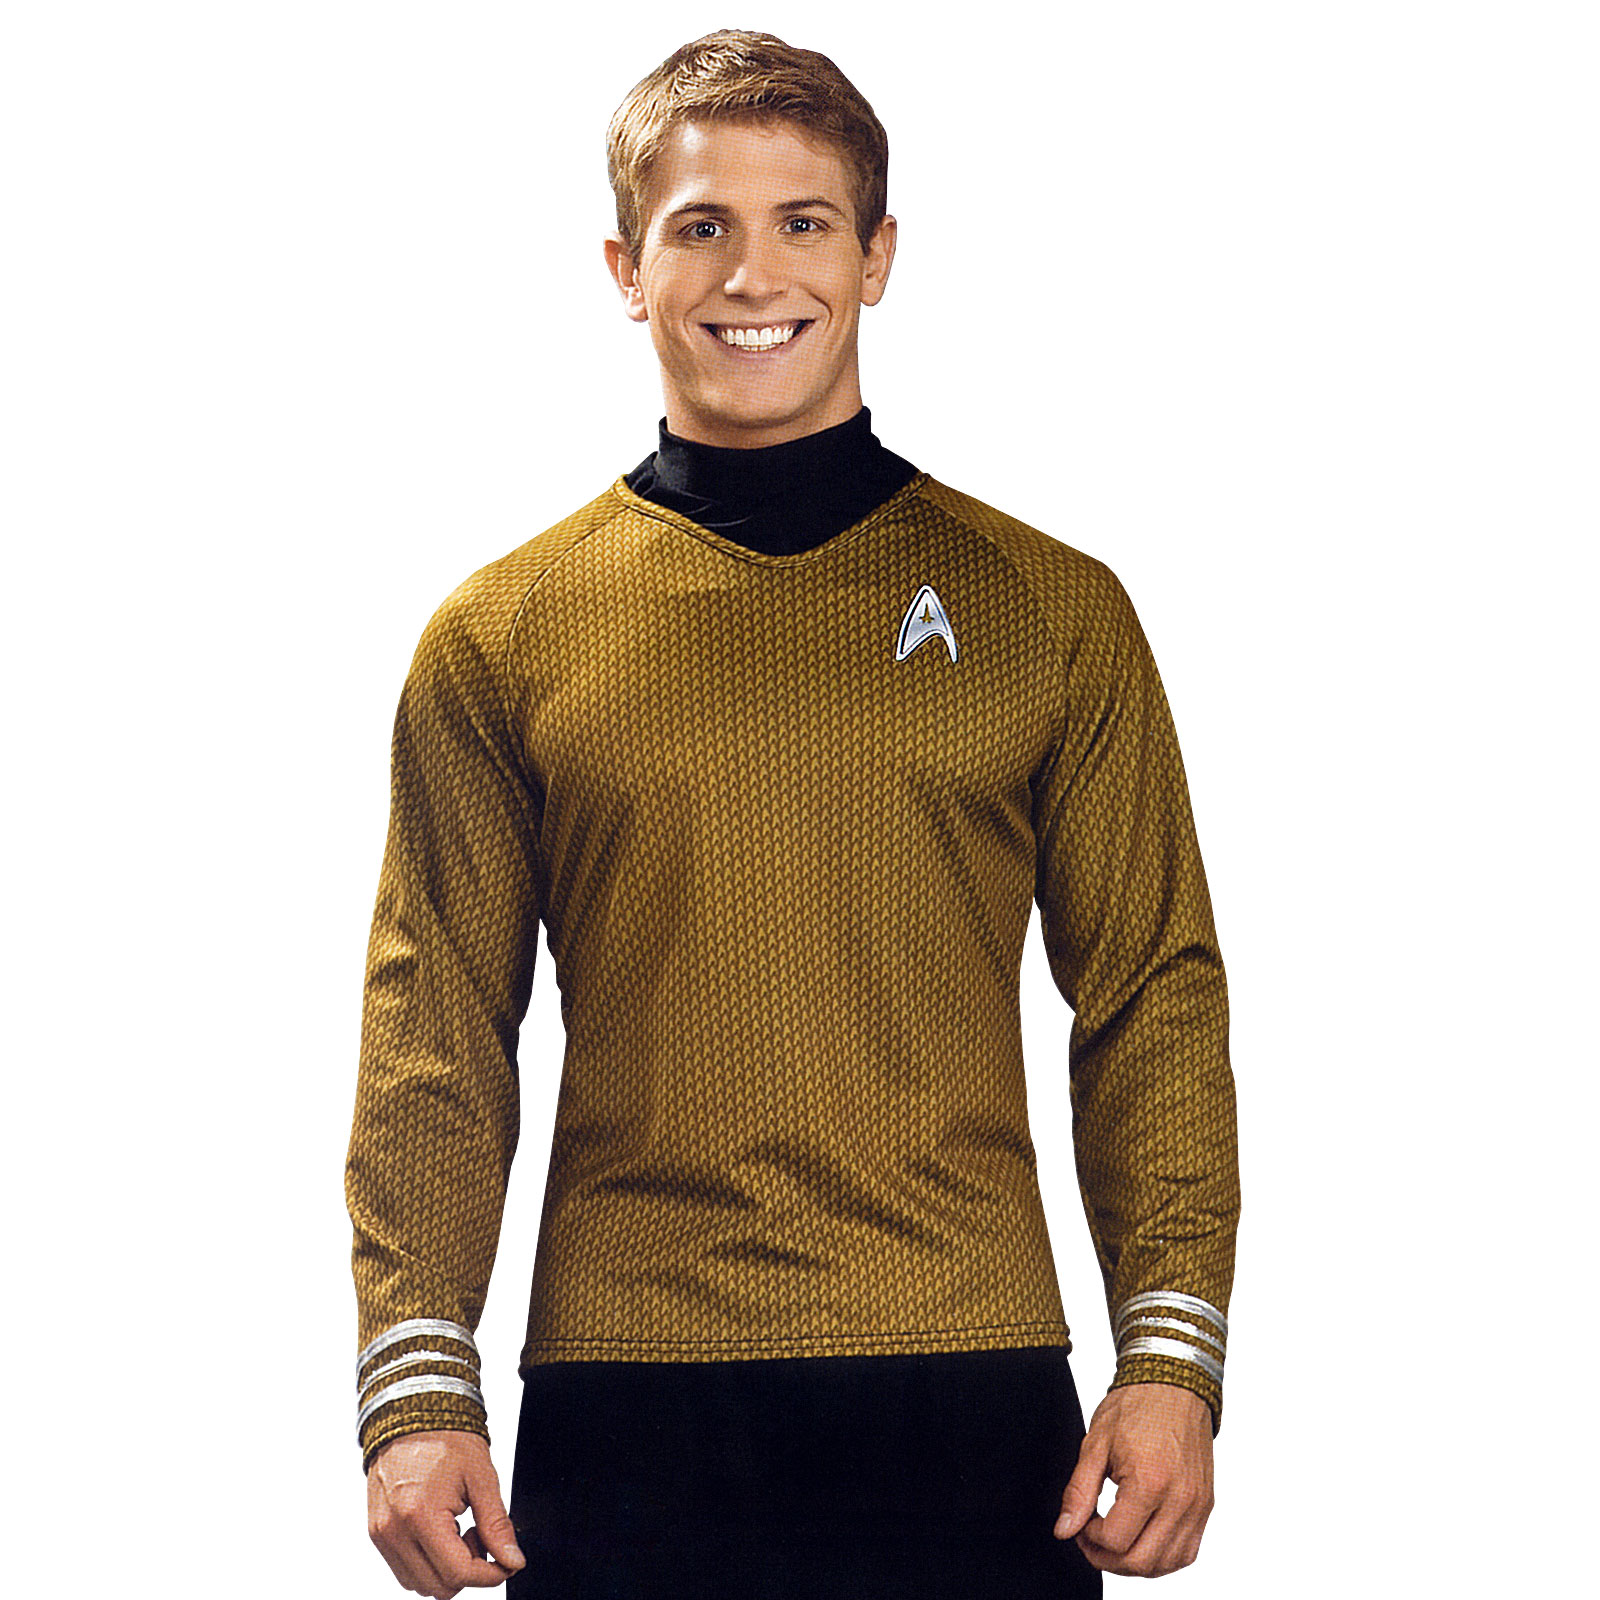 Star Trek - James T. Kirk Movie Deluxe Shirt